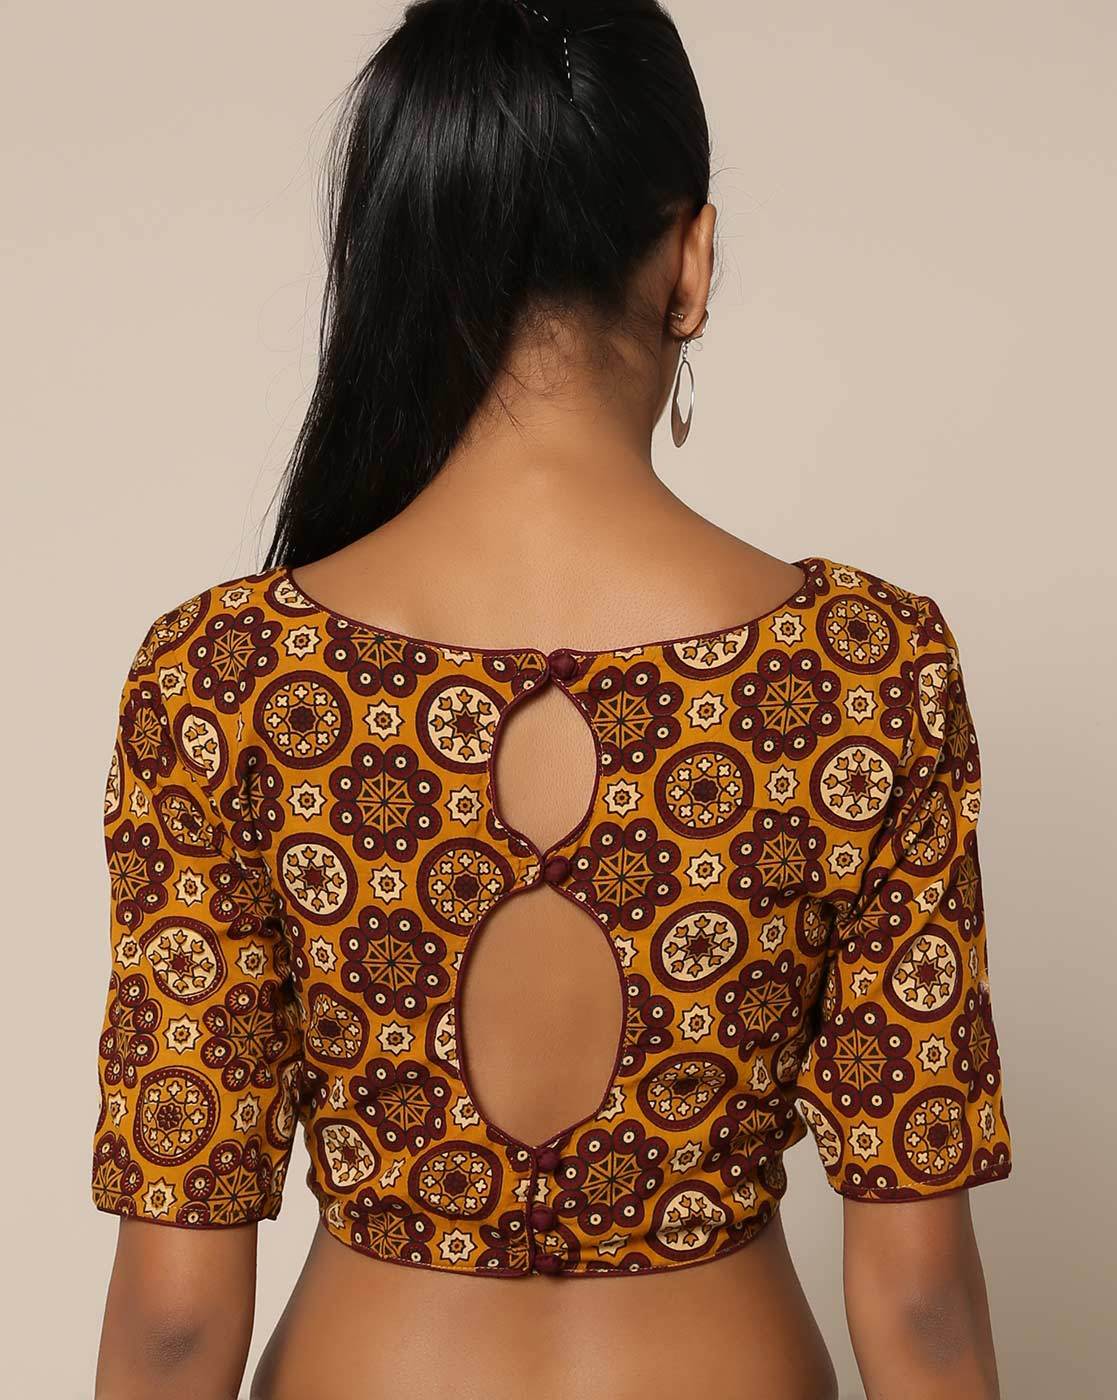 Blouse Back Neck Designs Catalogue For Silk Sarees - Saree Blouse Back New Design - HD Wallpaper 